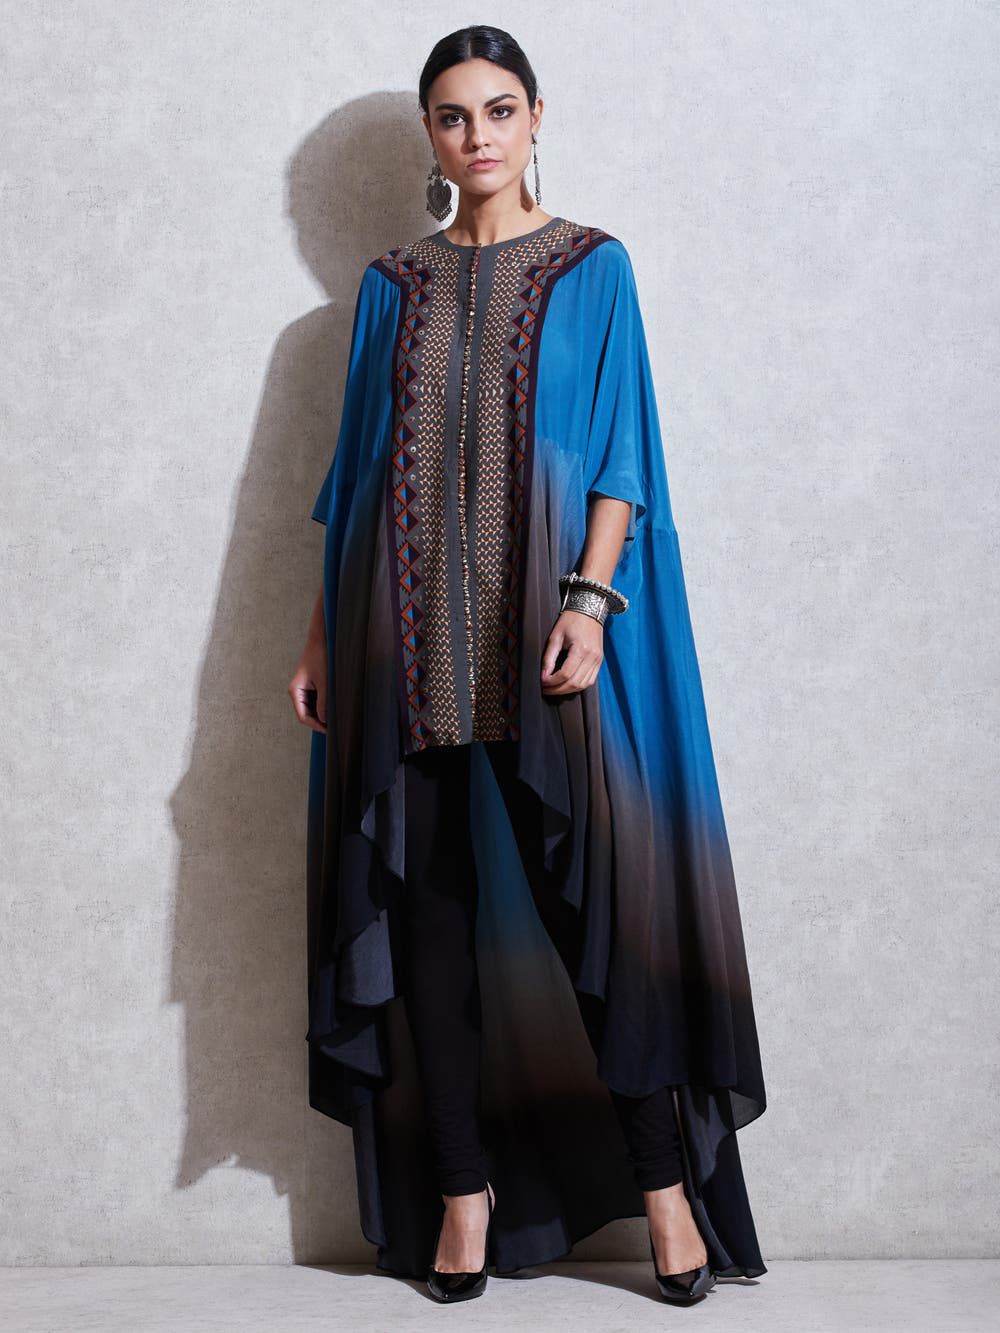 Indian Designer Chiffon Georgette tops blouse kurta Kurtis-Tunics for Women 